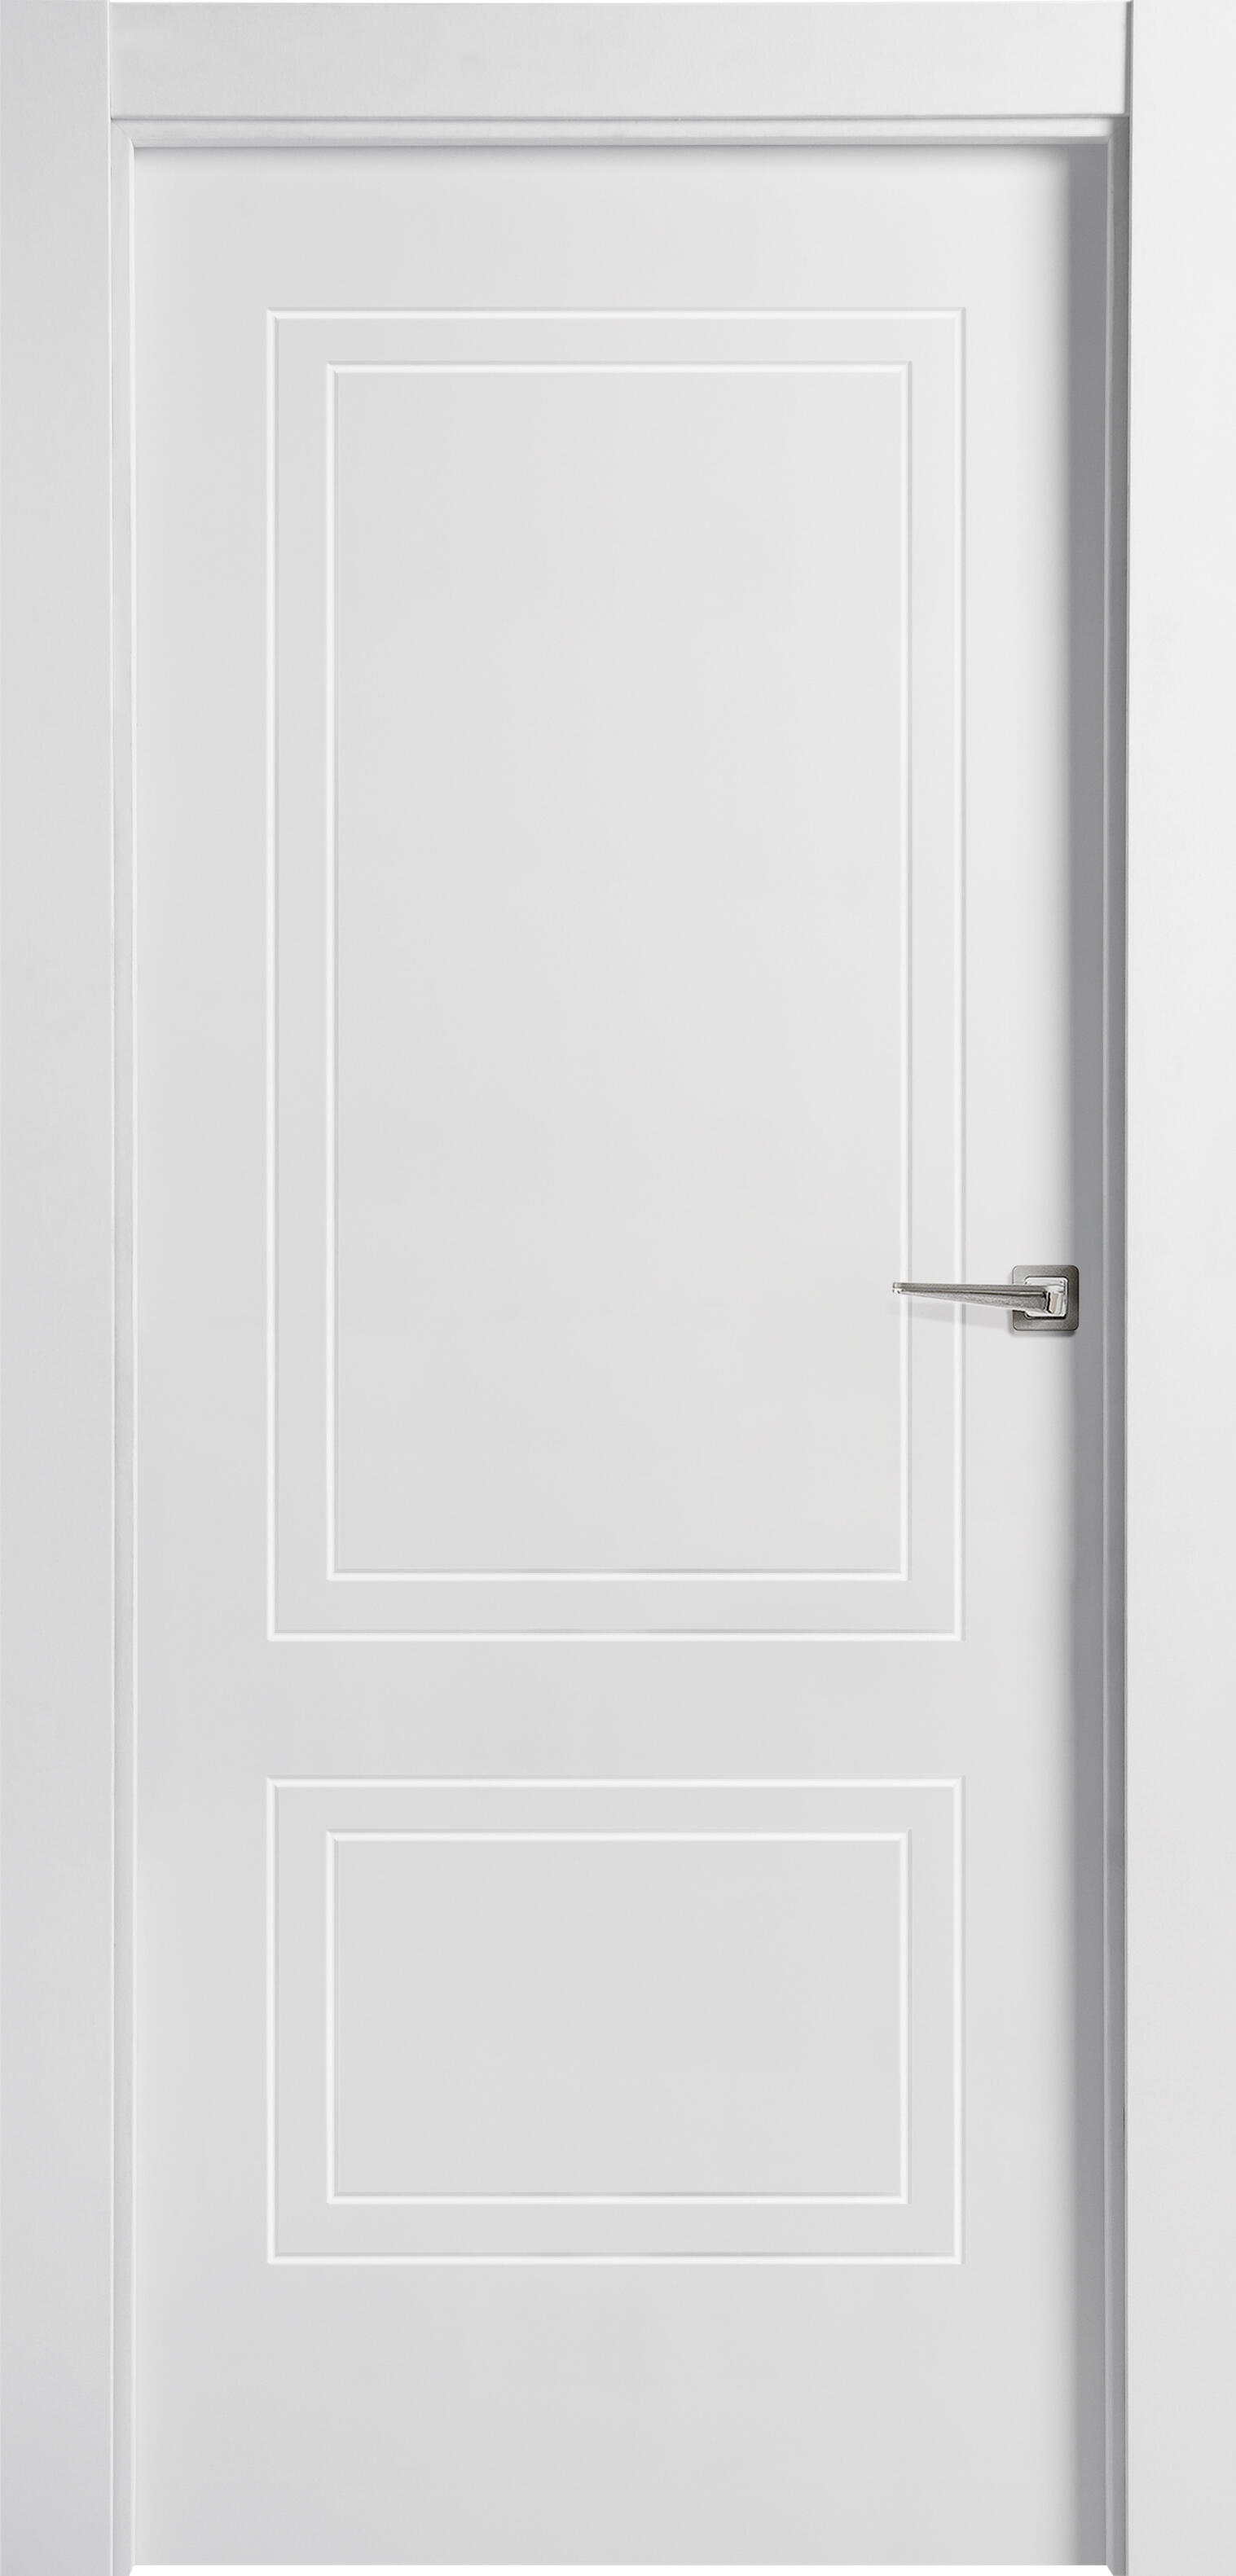 Puerta boston blanco de apertura izquierda de 11x 92.5 cm